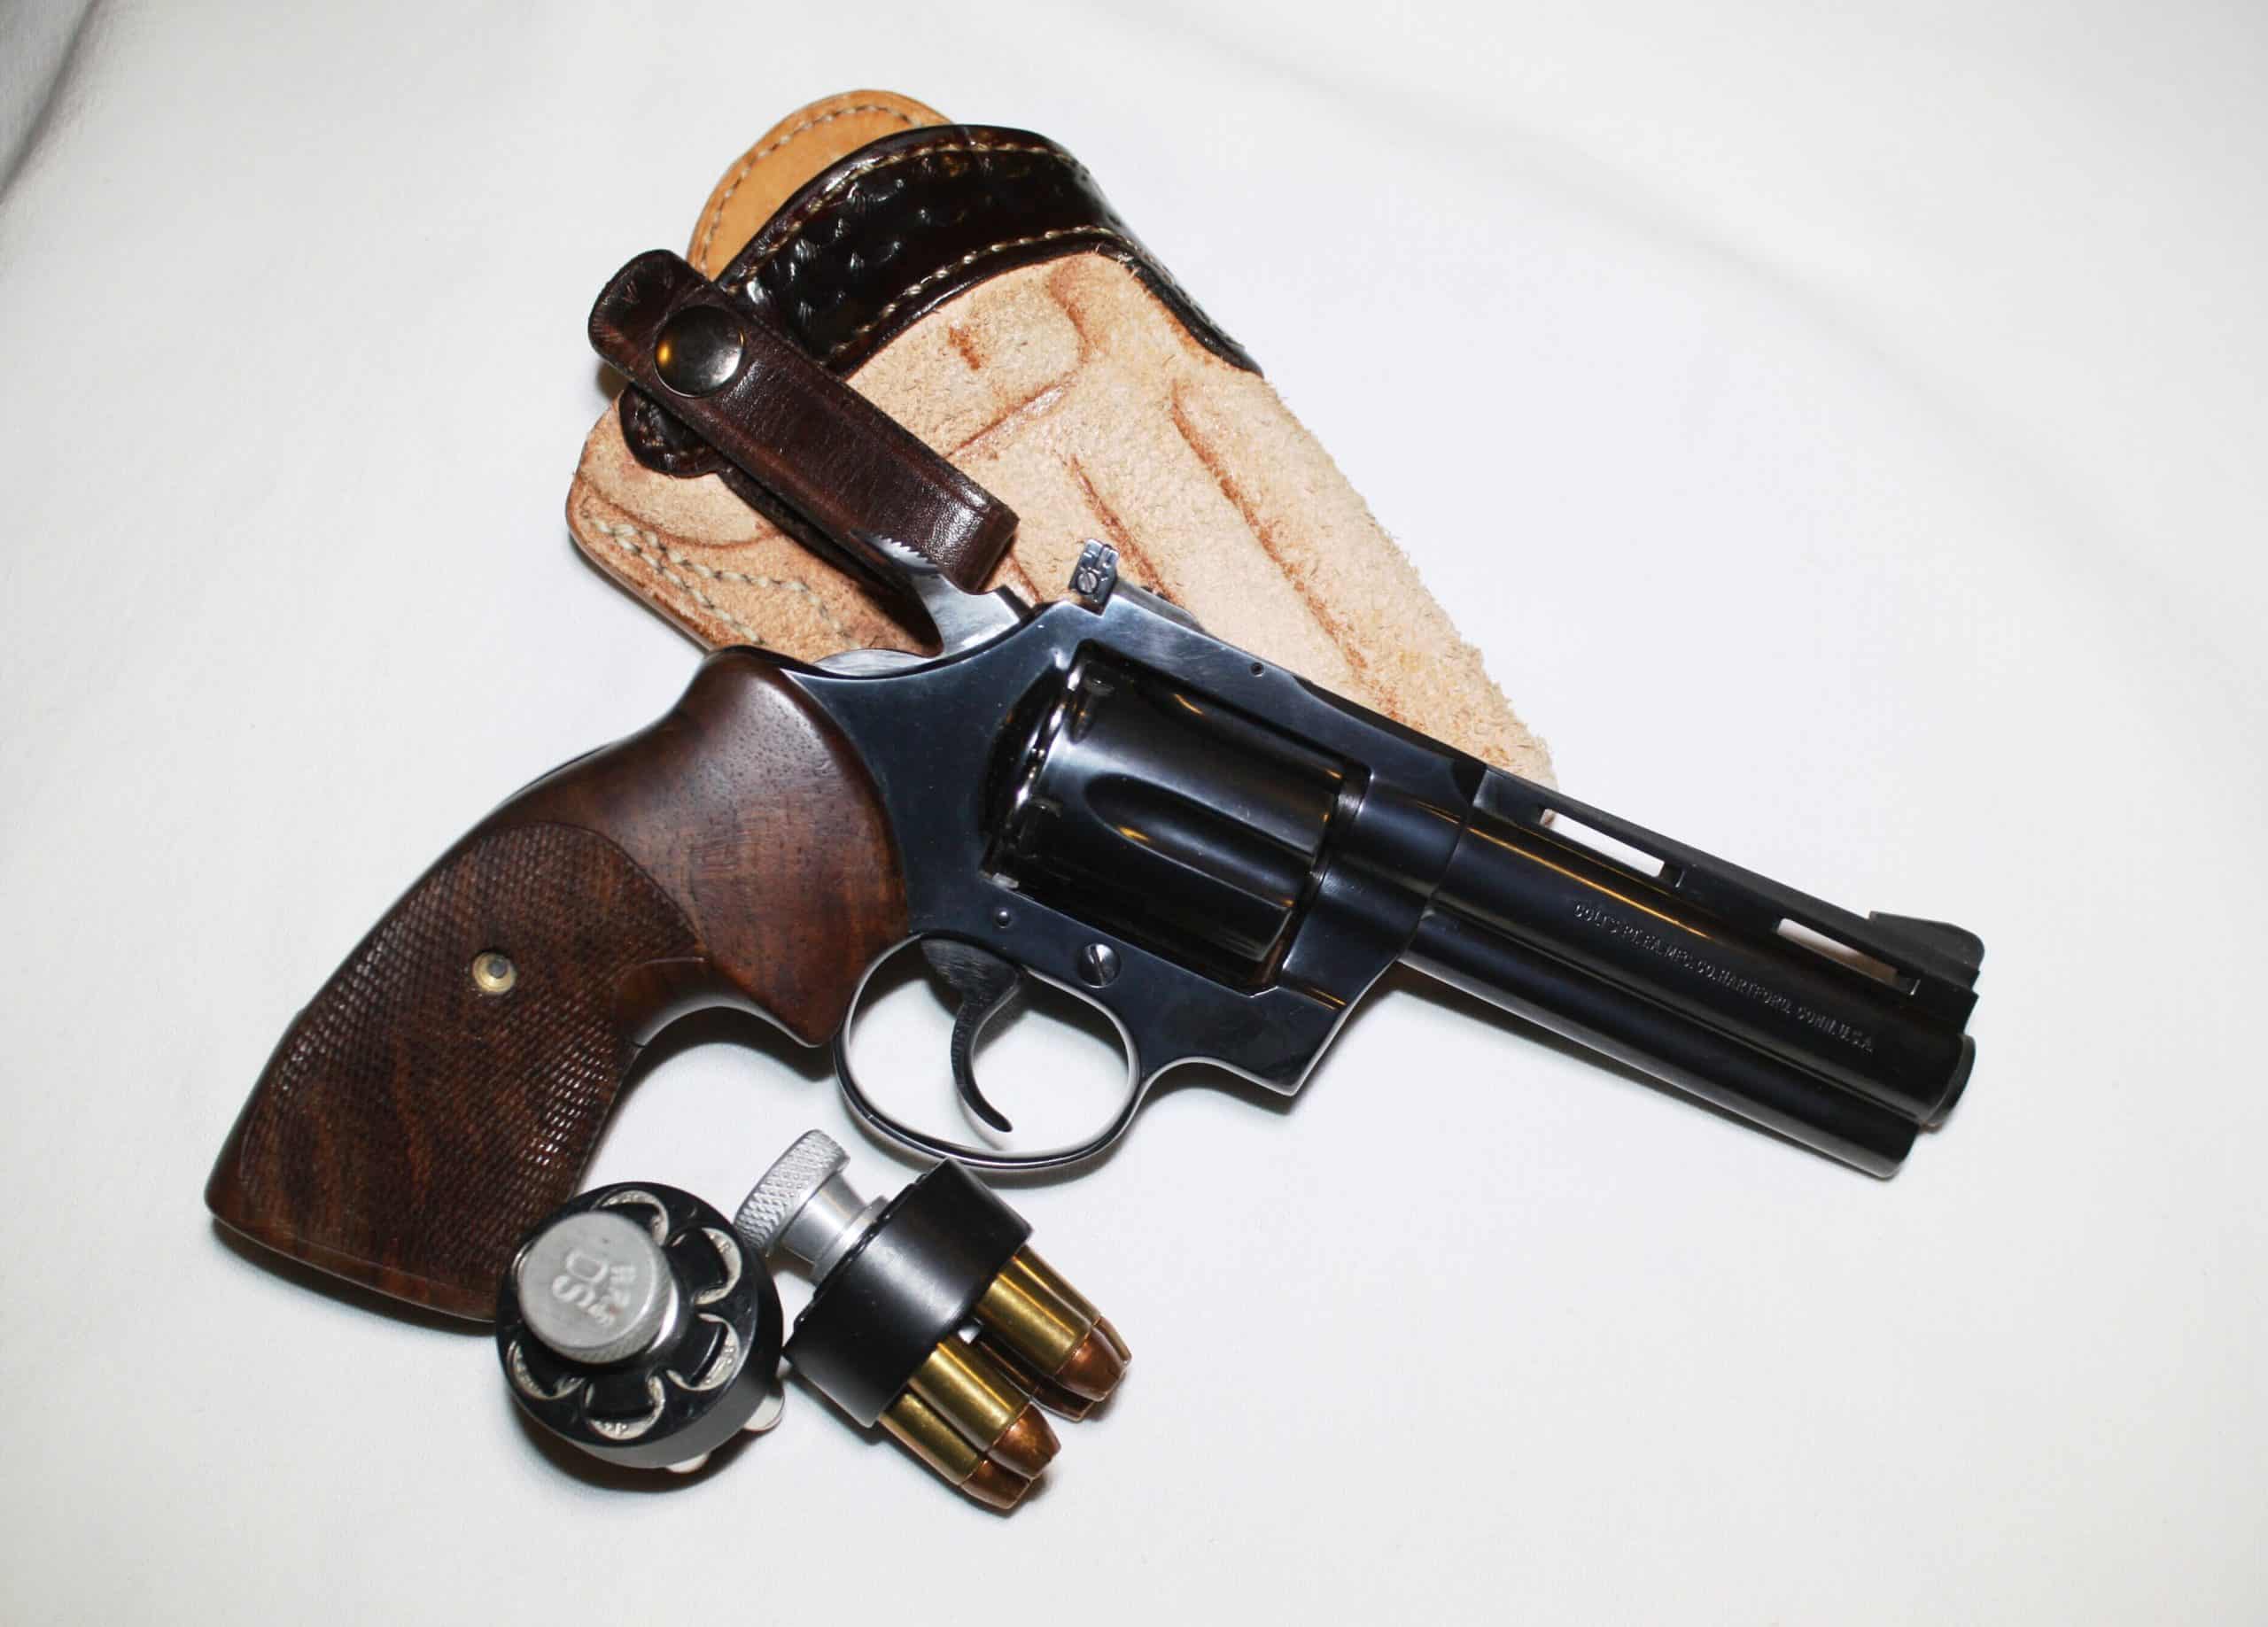 handgun and holster